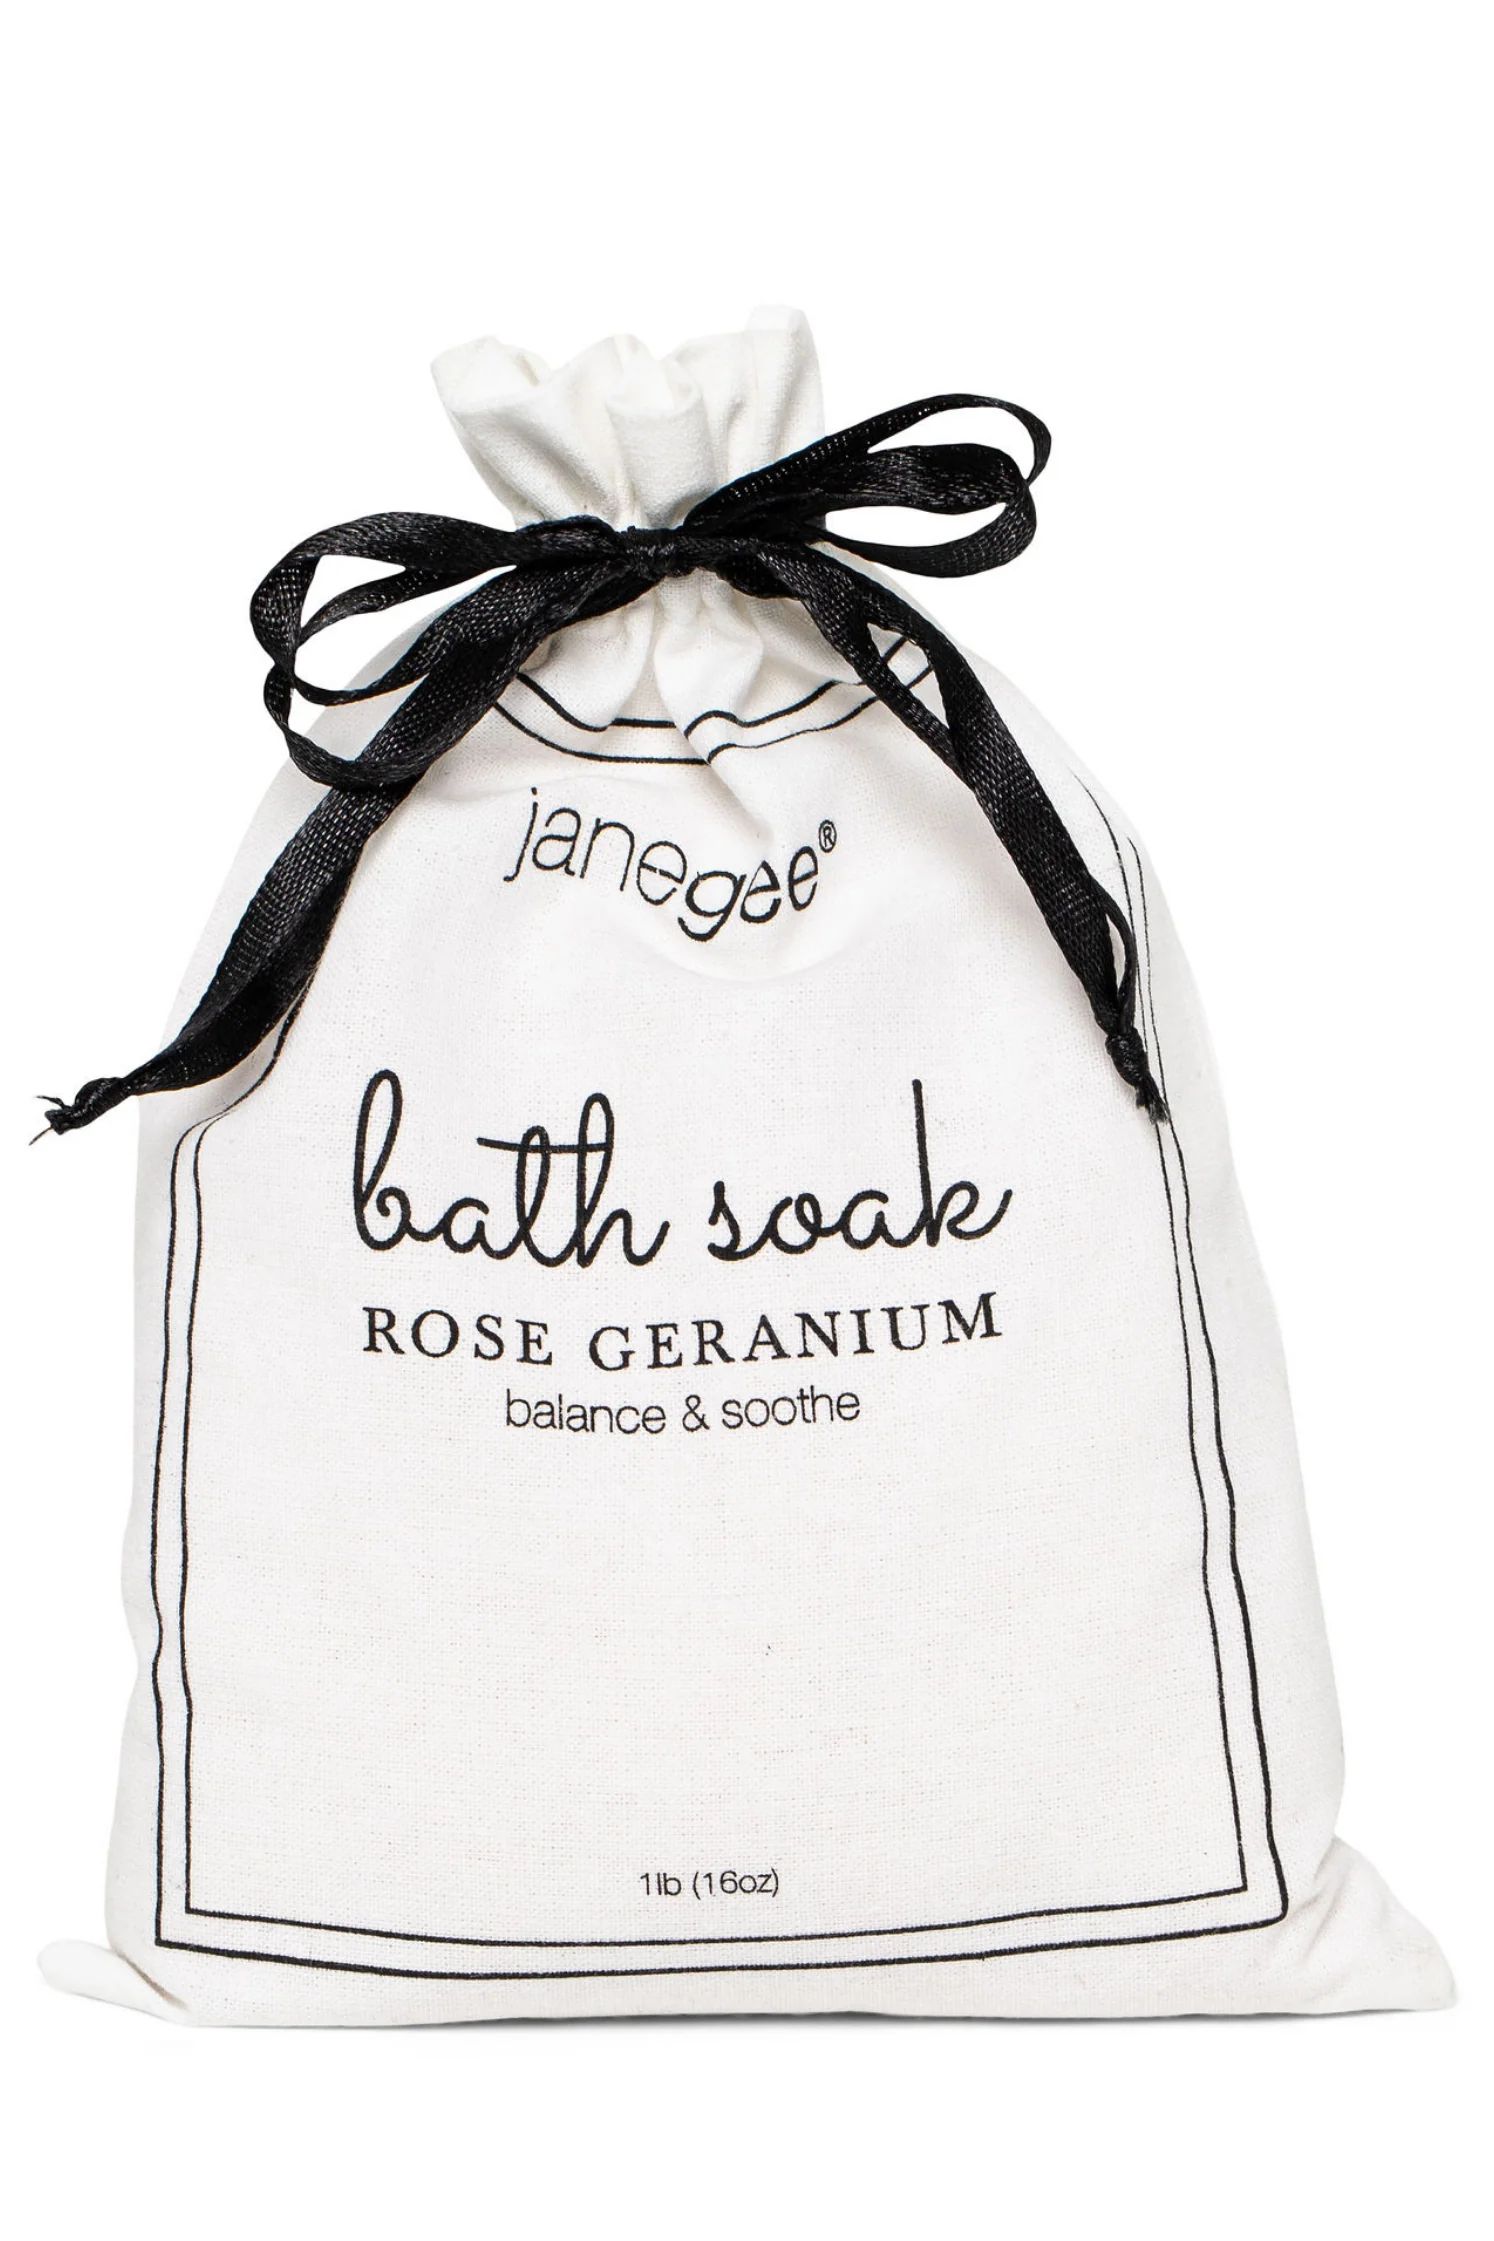 janegee Rose Geranium Bath Soak | janegee